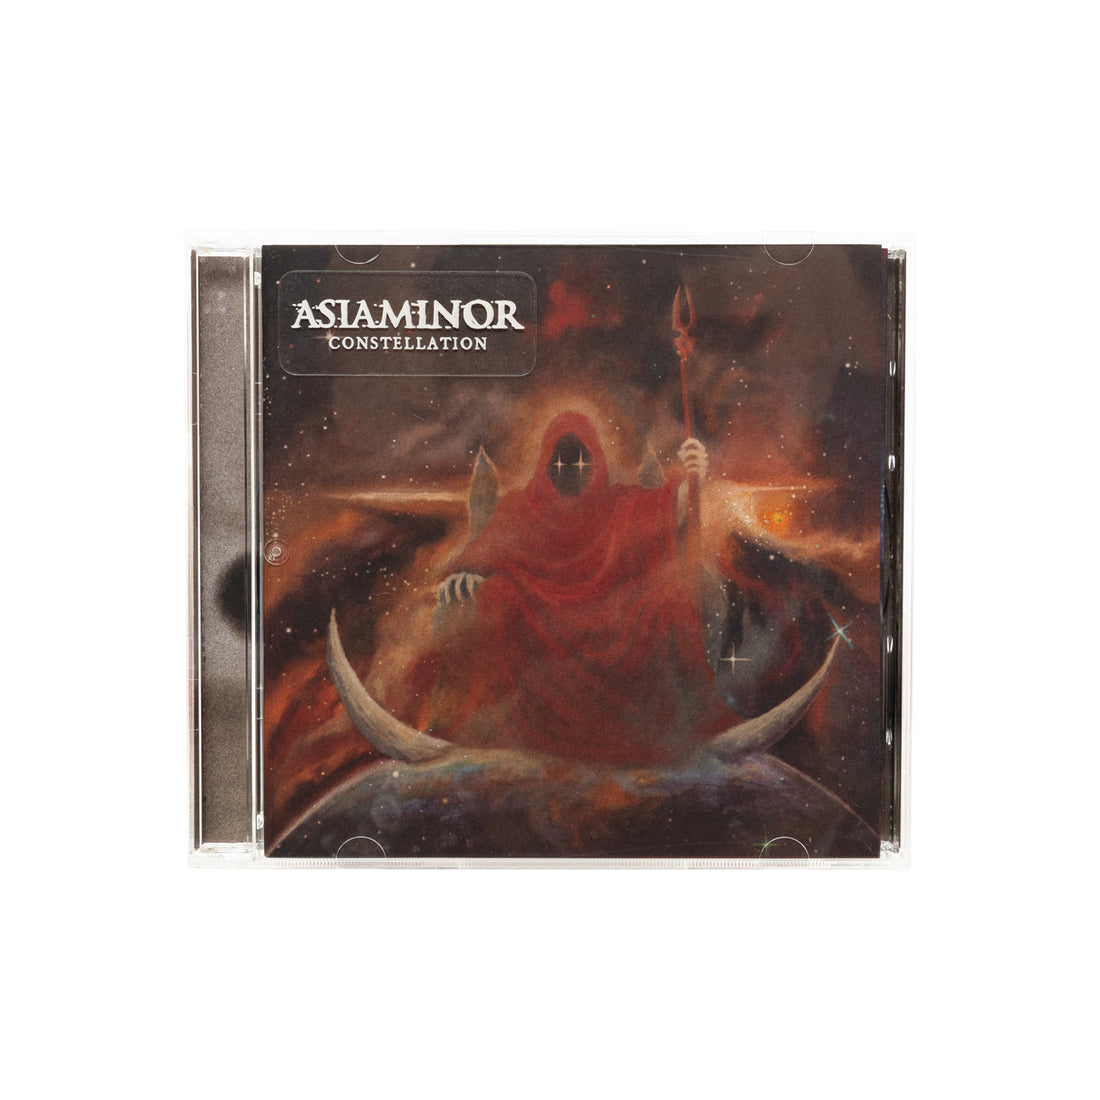 ASIAMINOR - CONSTELLATION EP CDs